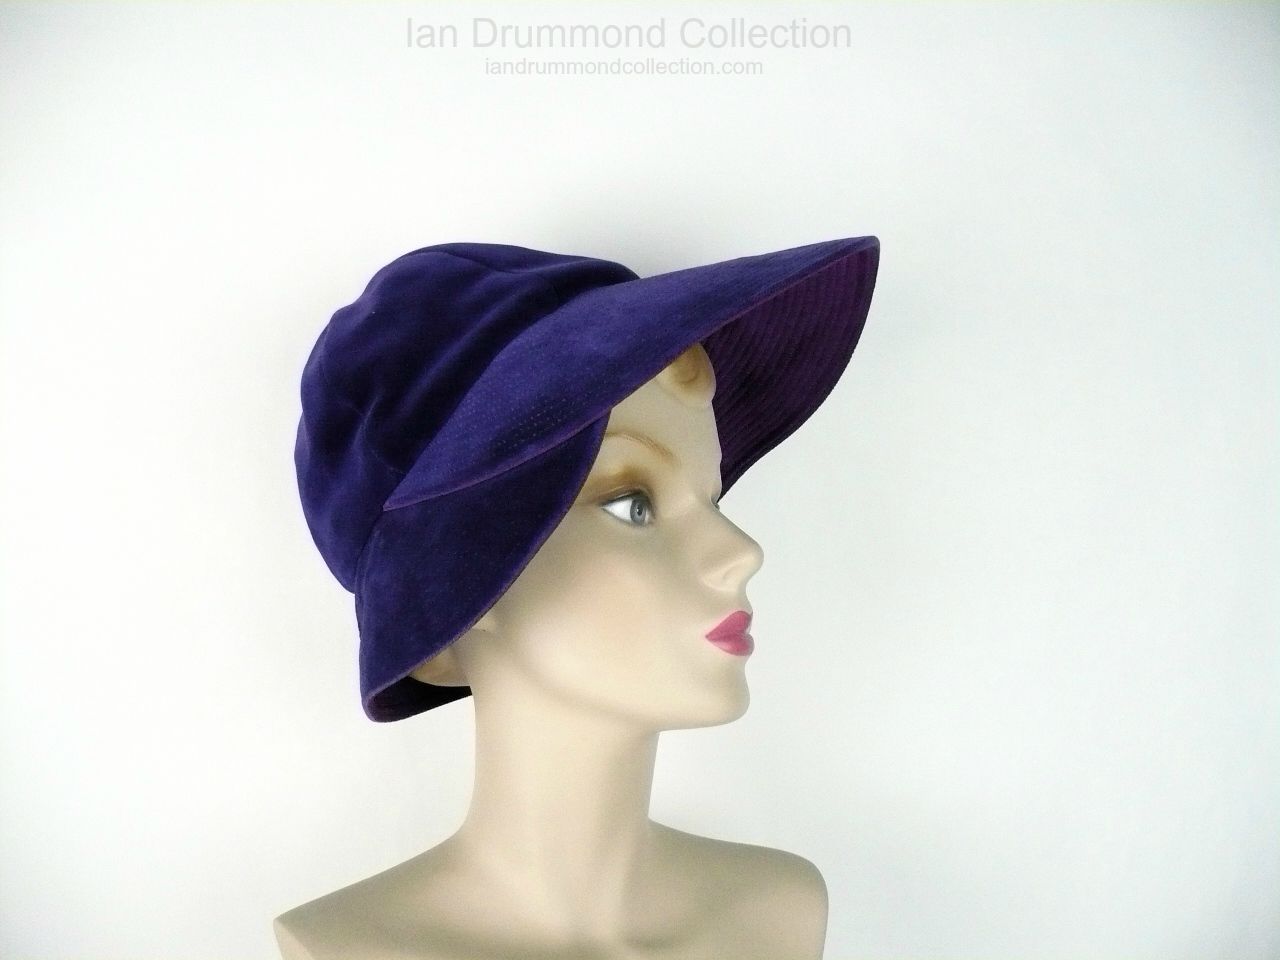 Ian Drummond Collection Toronto Vintage Clothing Show Purple Velvet Hat